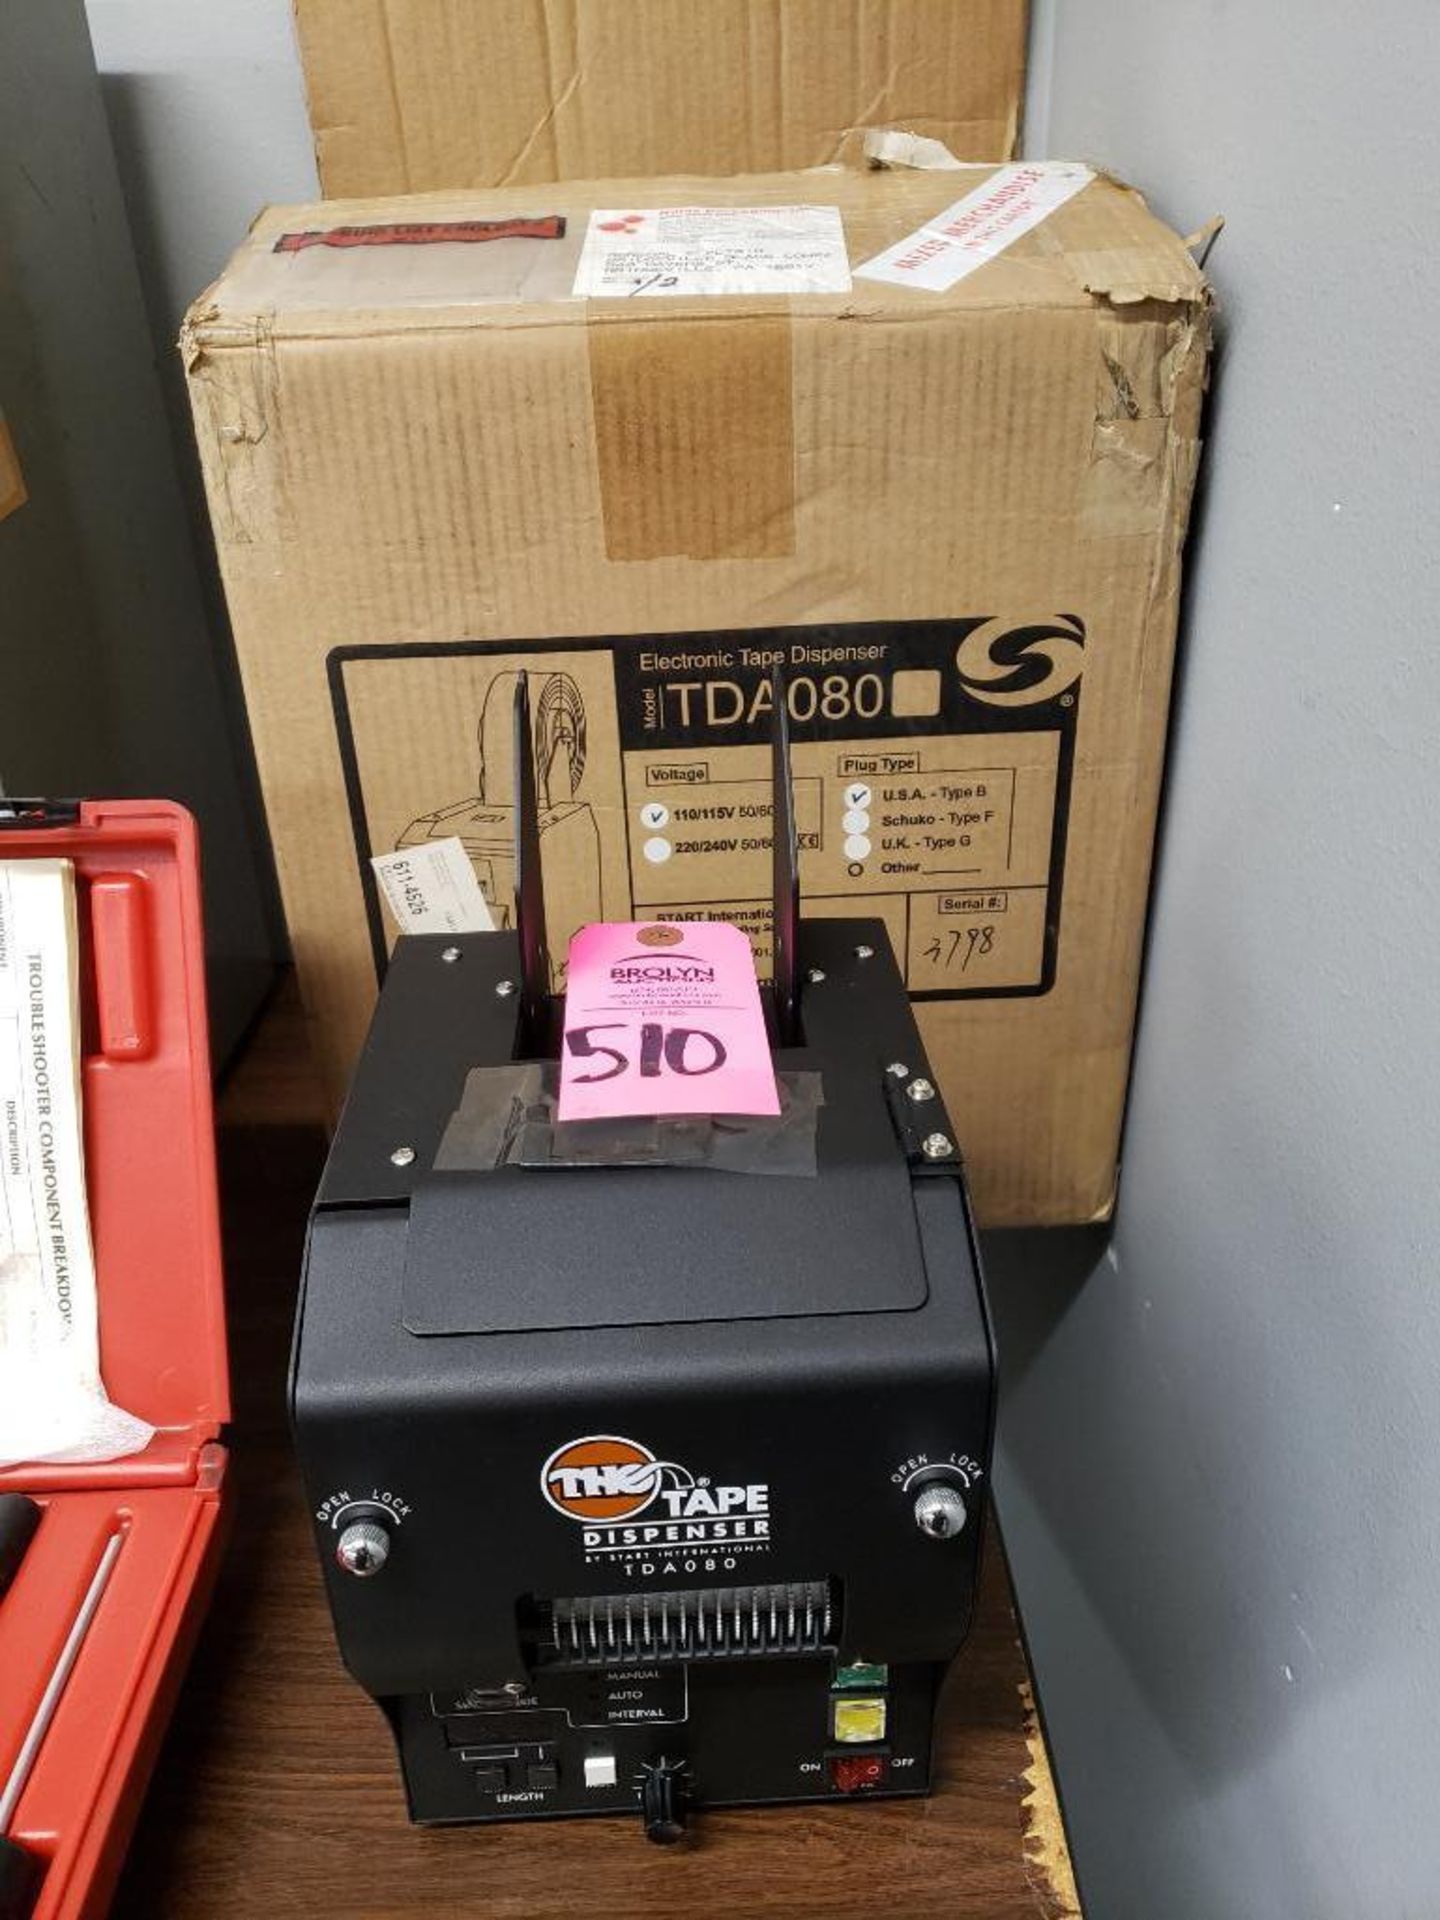 The Tape Dispenser. Modle TDA080. New in box.